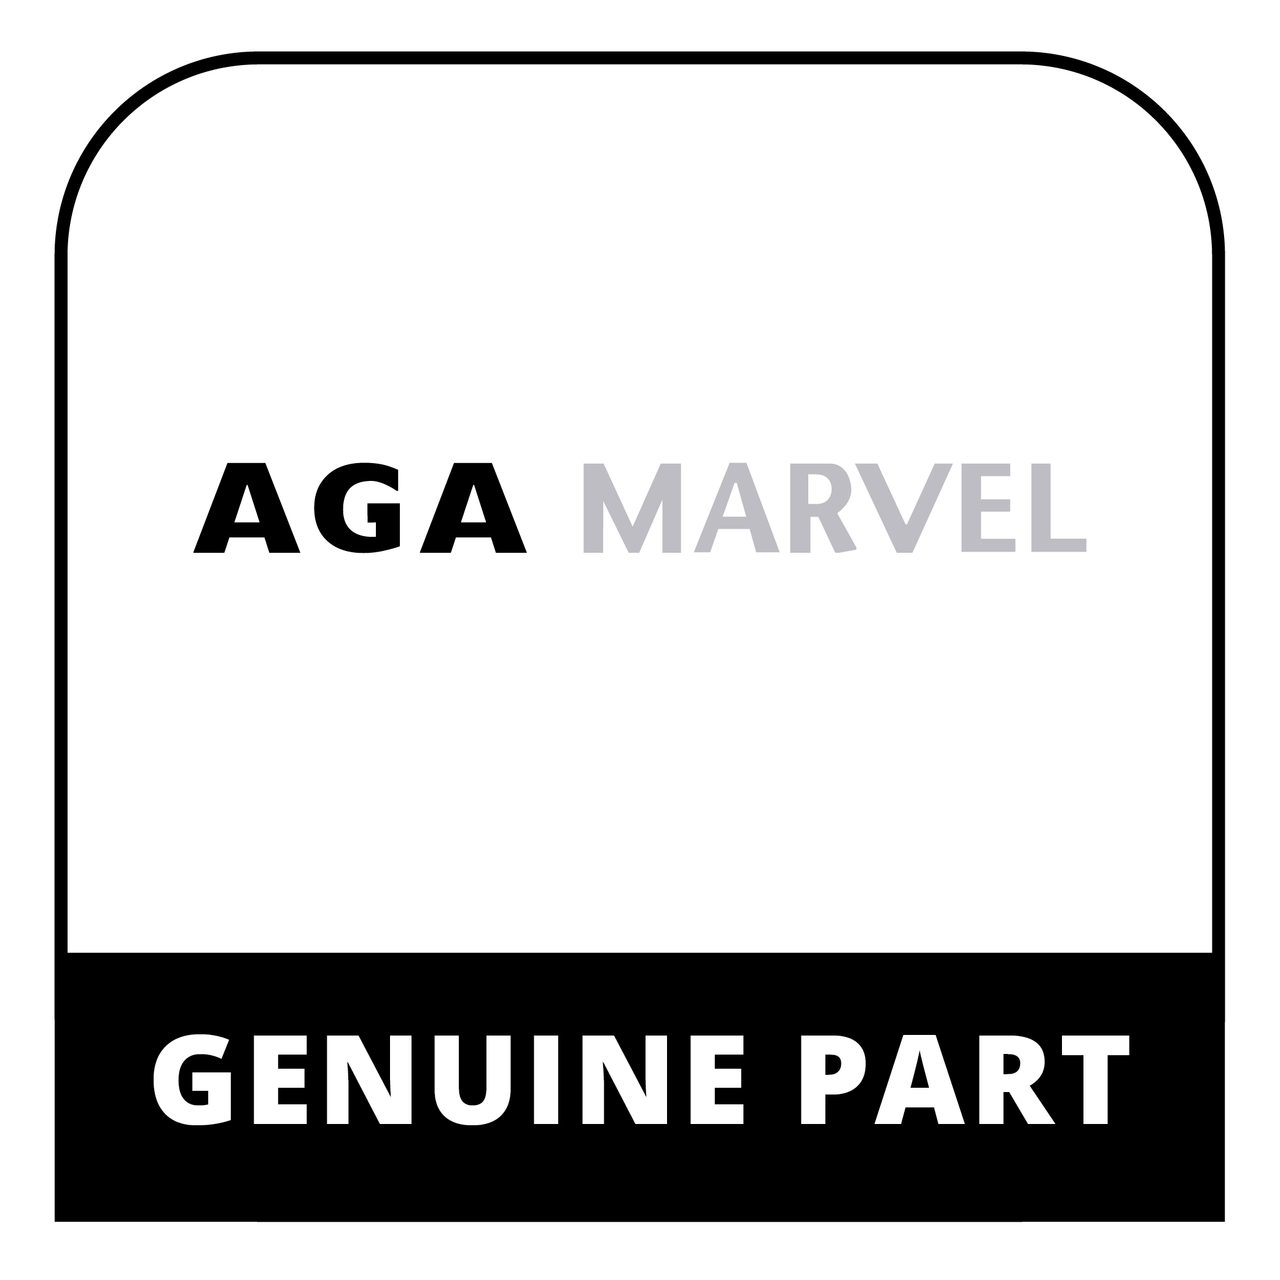 AGA Marvel R2871 - Fire Box Side Plate Gd80 - Genuine AGA Marvel Part